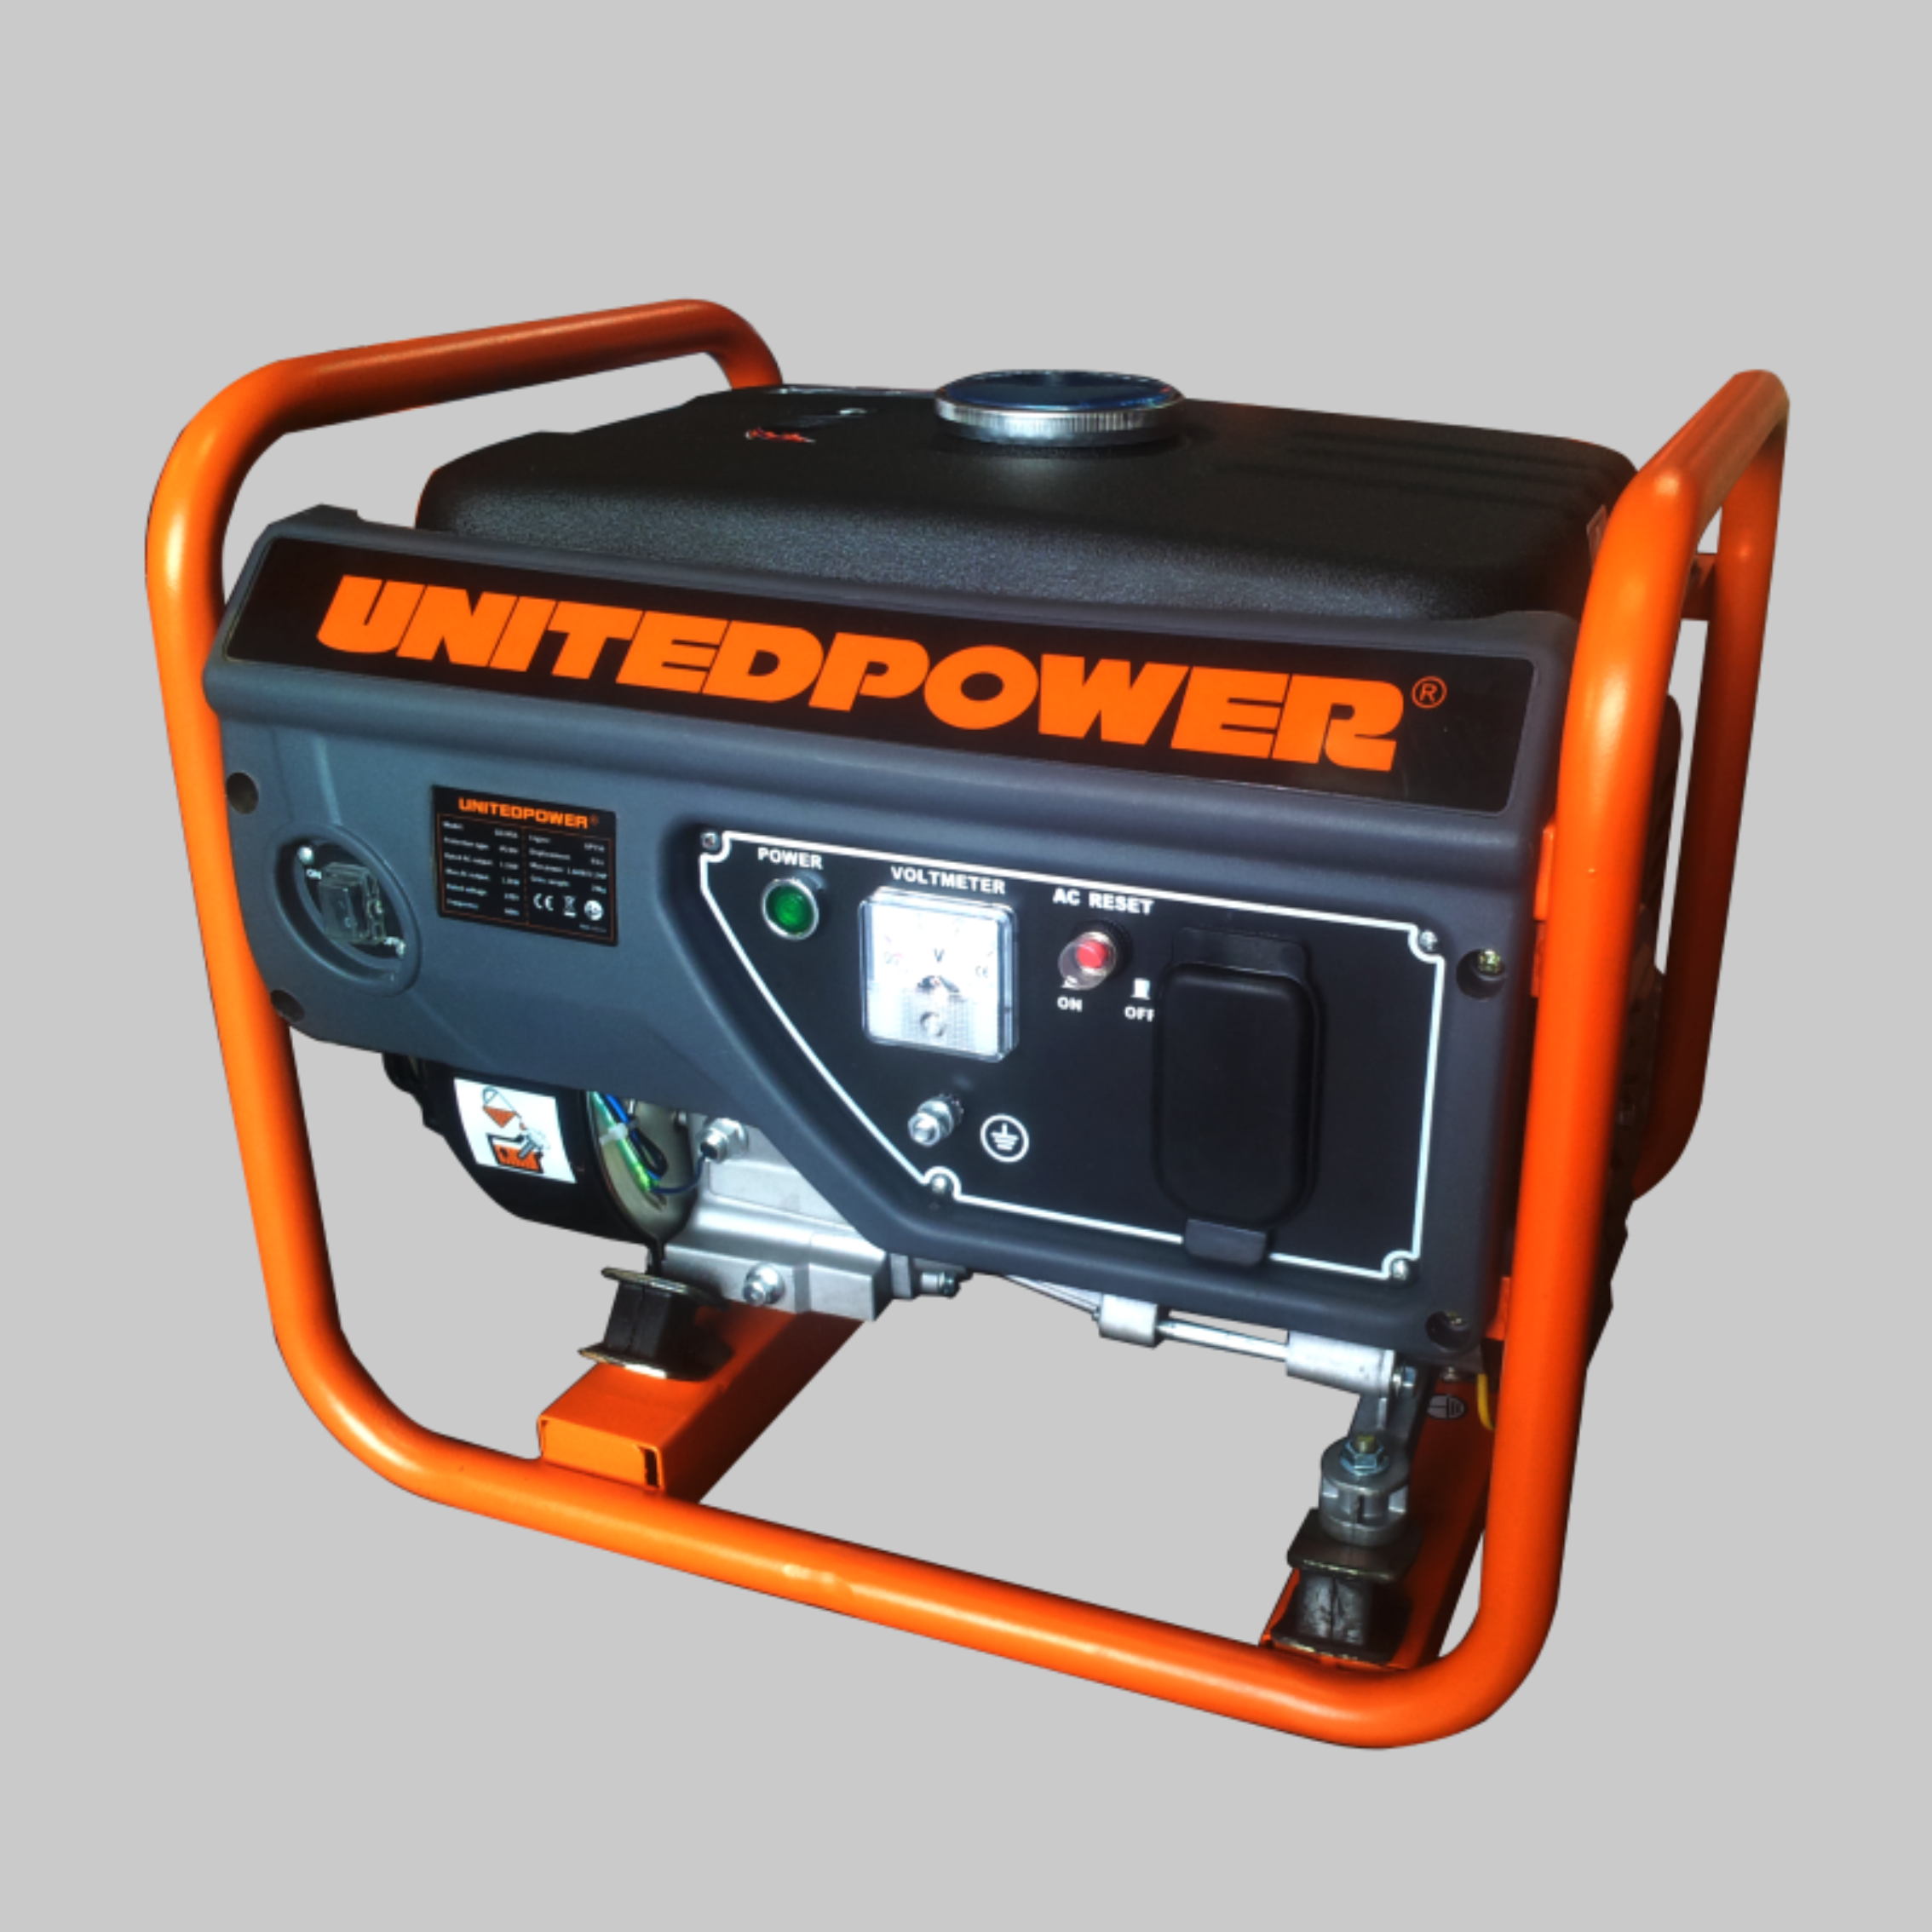 United Power Generator – Gasoline Series 1.2KW (GG1456)